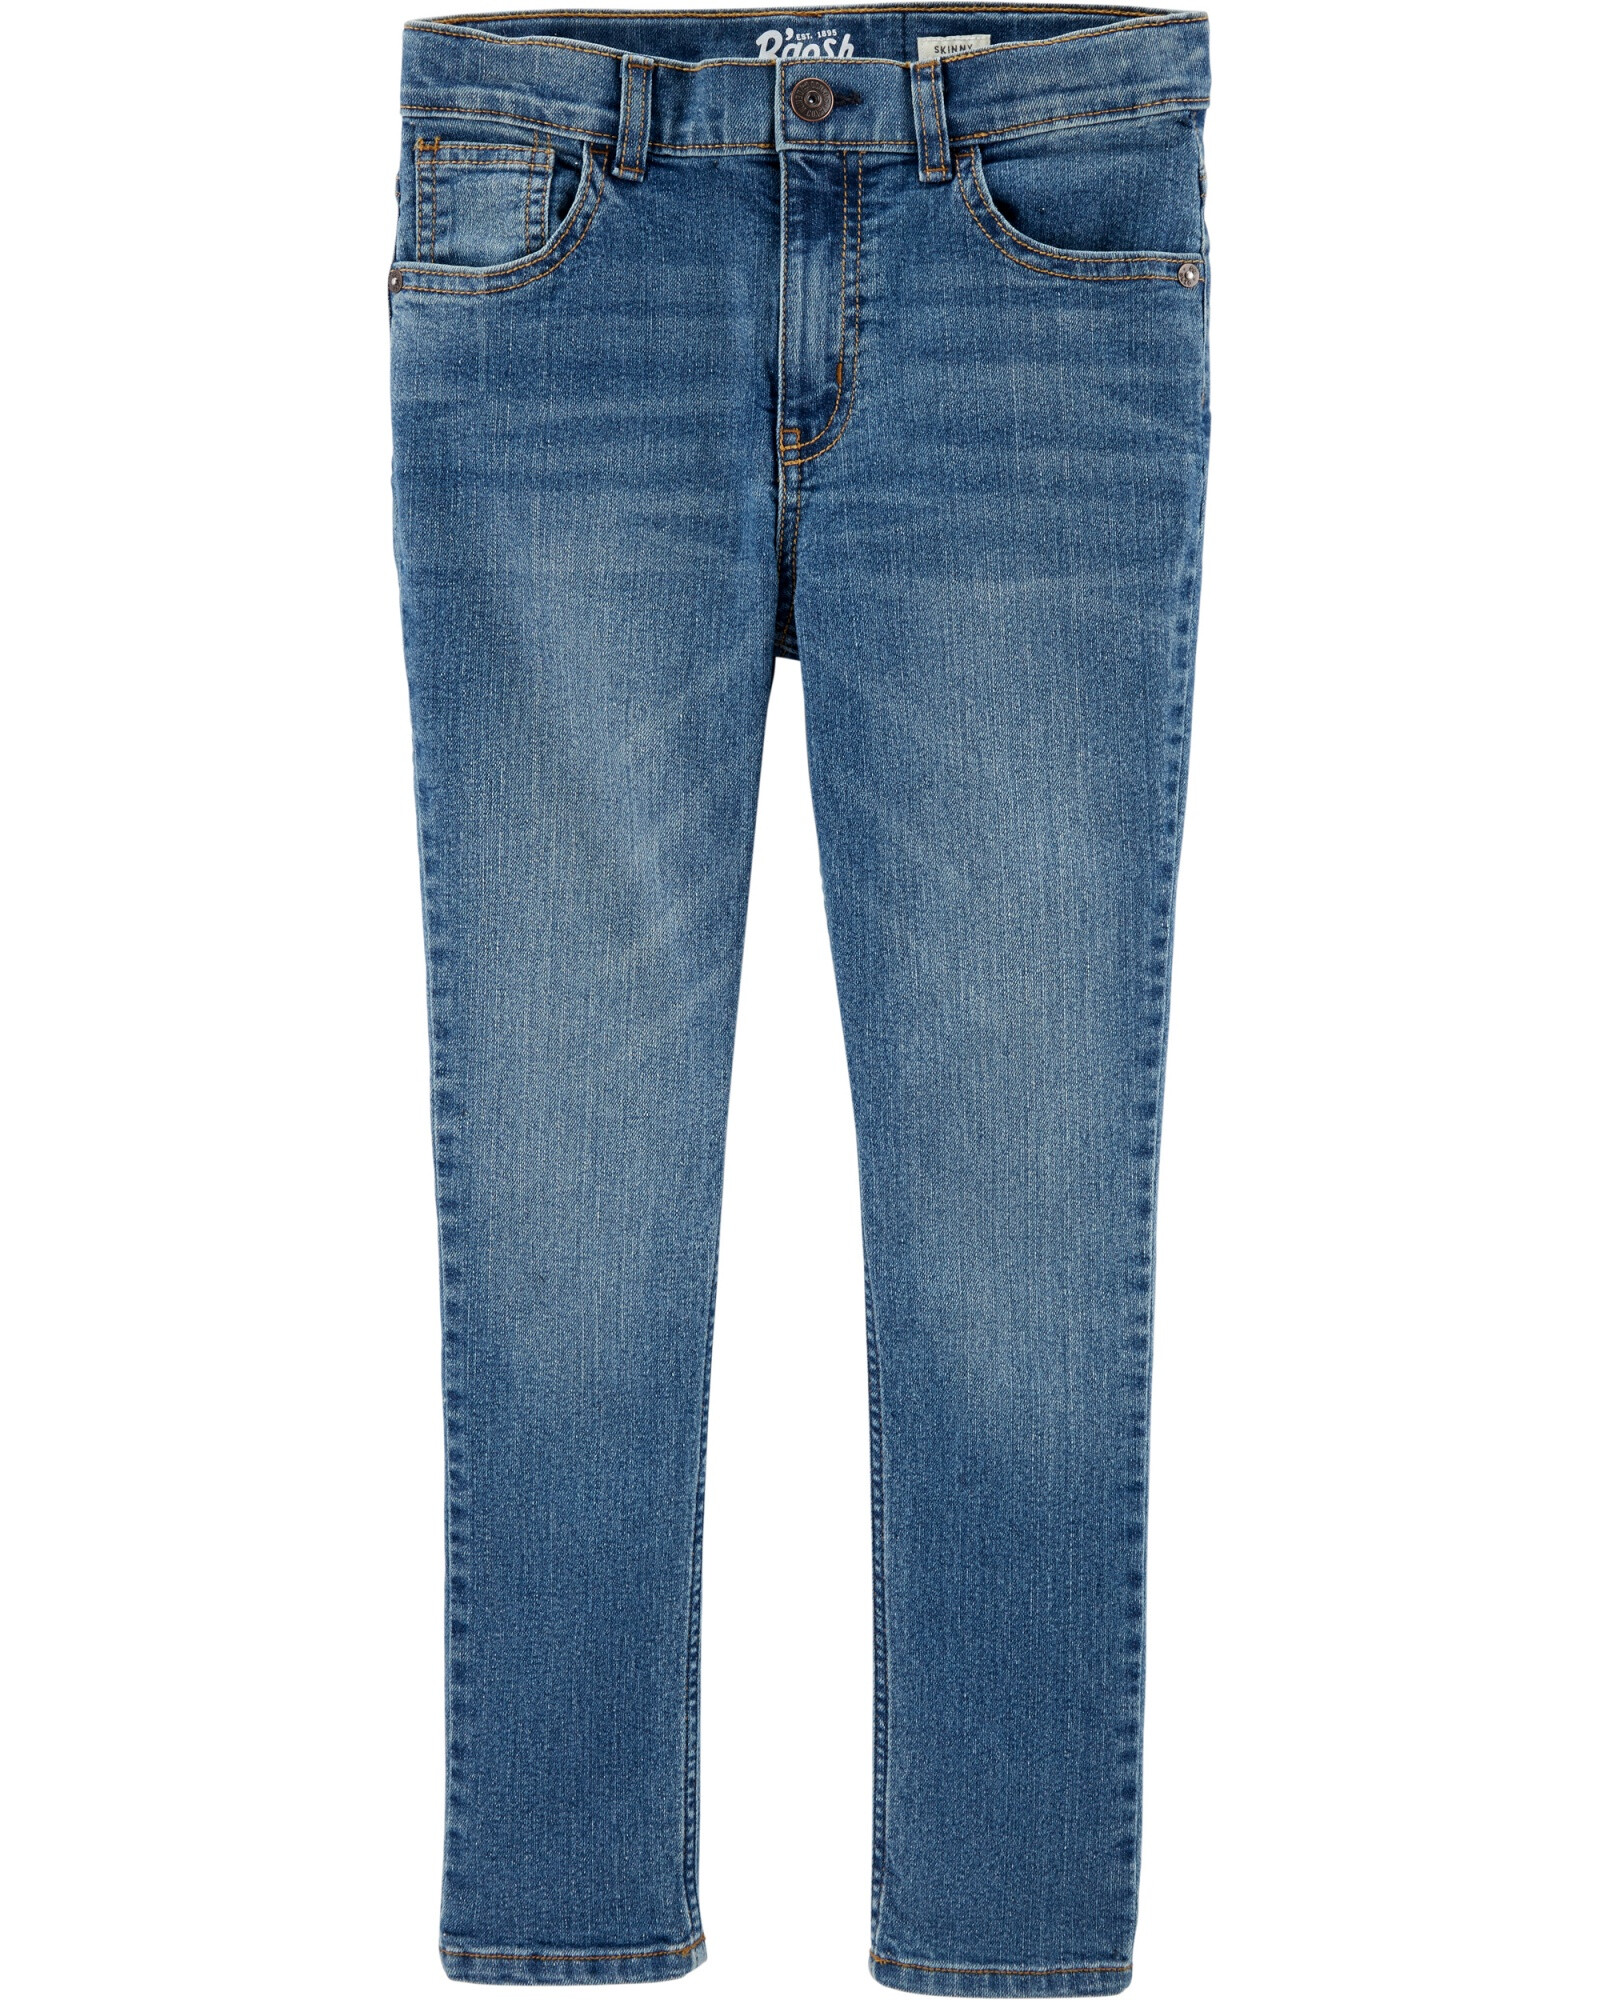 Pantalón de jean clásico. Talles 5-12 Sin color